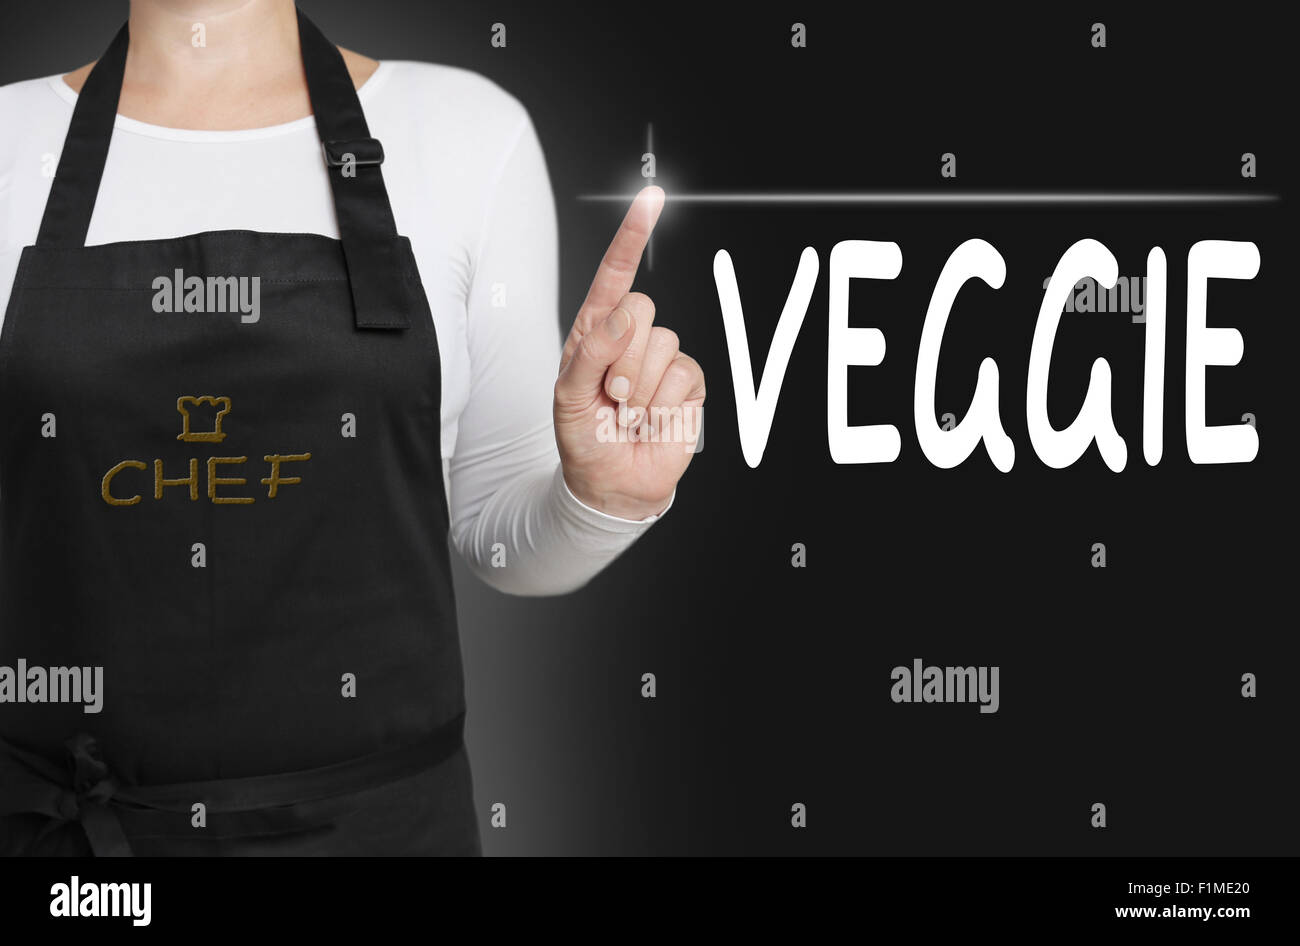 veggie concept cook Touchscreen background. Stock Photo